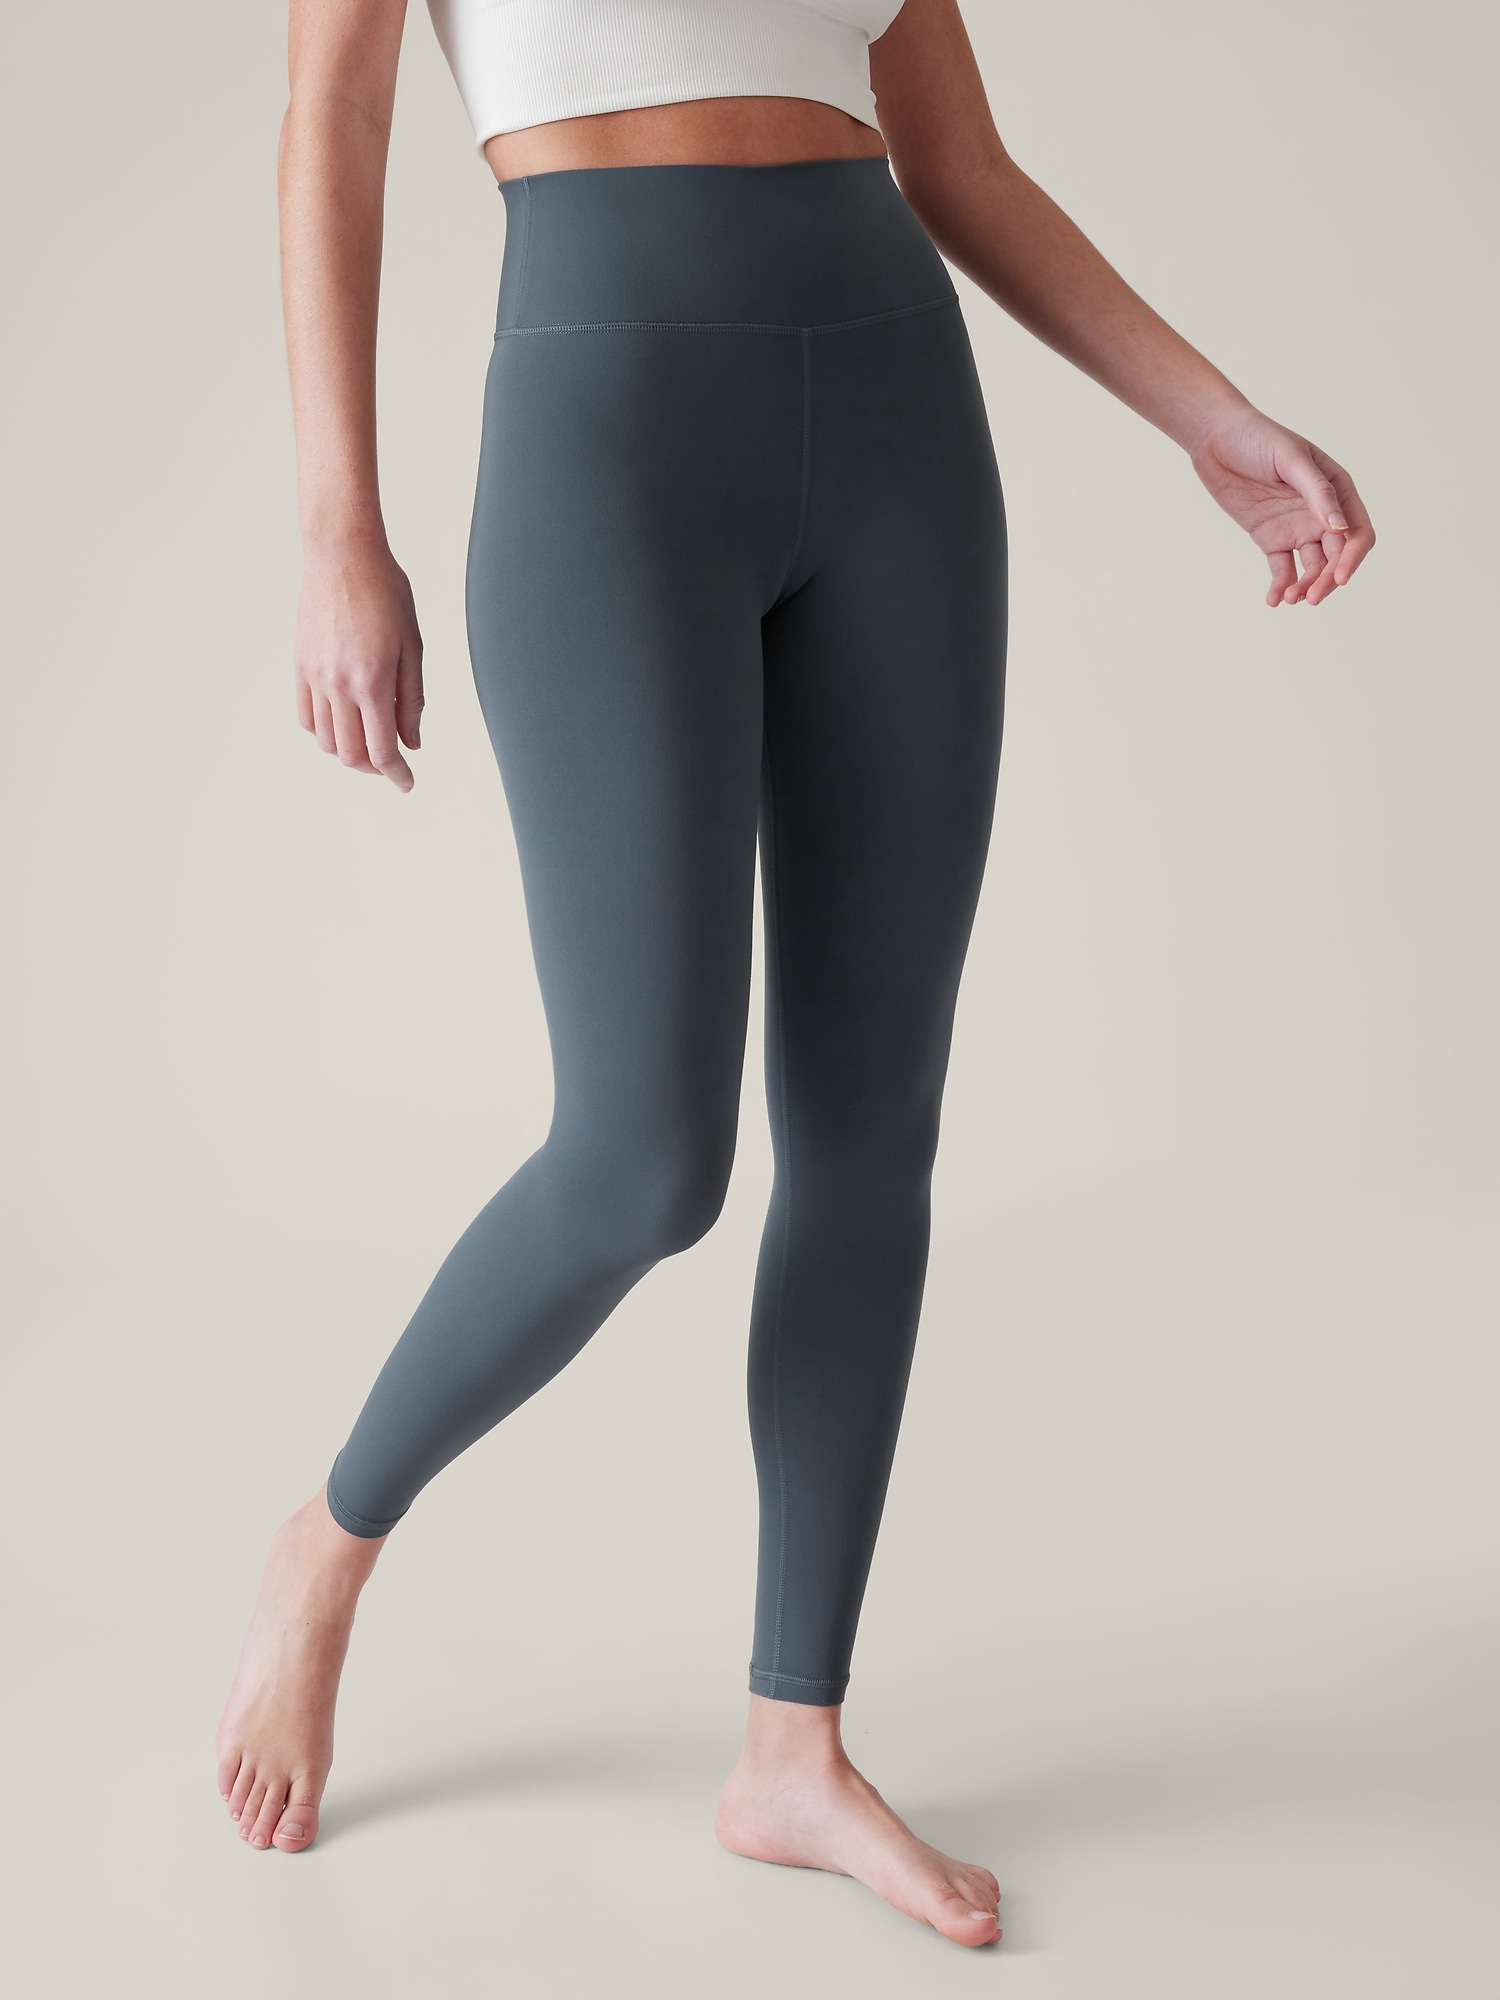 Cathalem Yoga Pants for Women Petite Length Exercise Yoga Waist Bubble  Running Yoga Pants for Women Tall Length Mesh Lift Pants Black Small